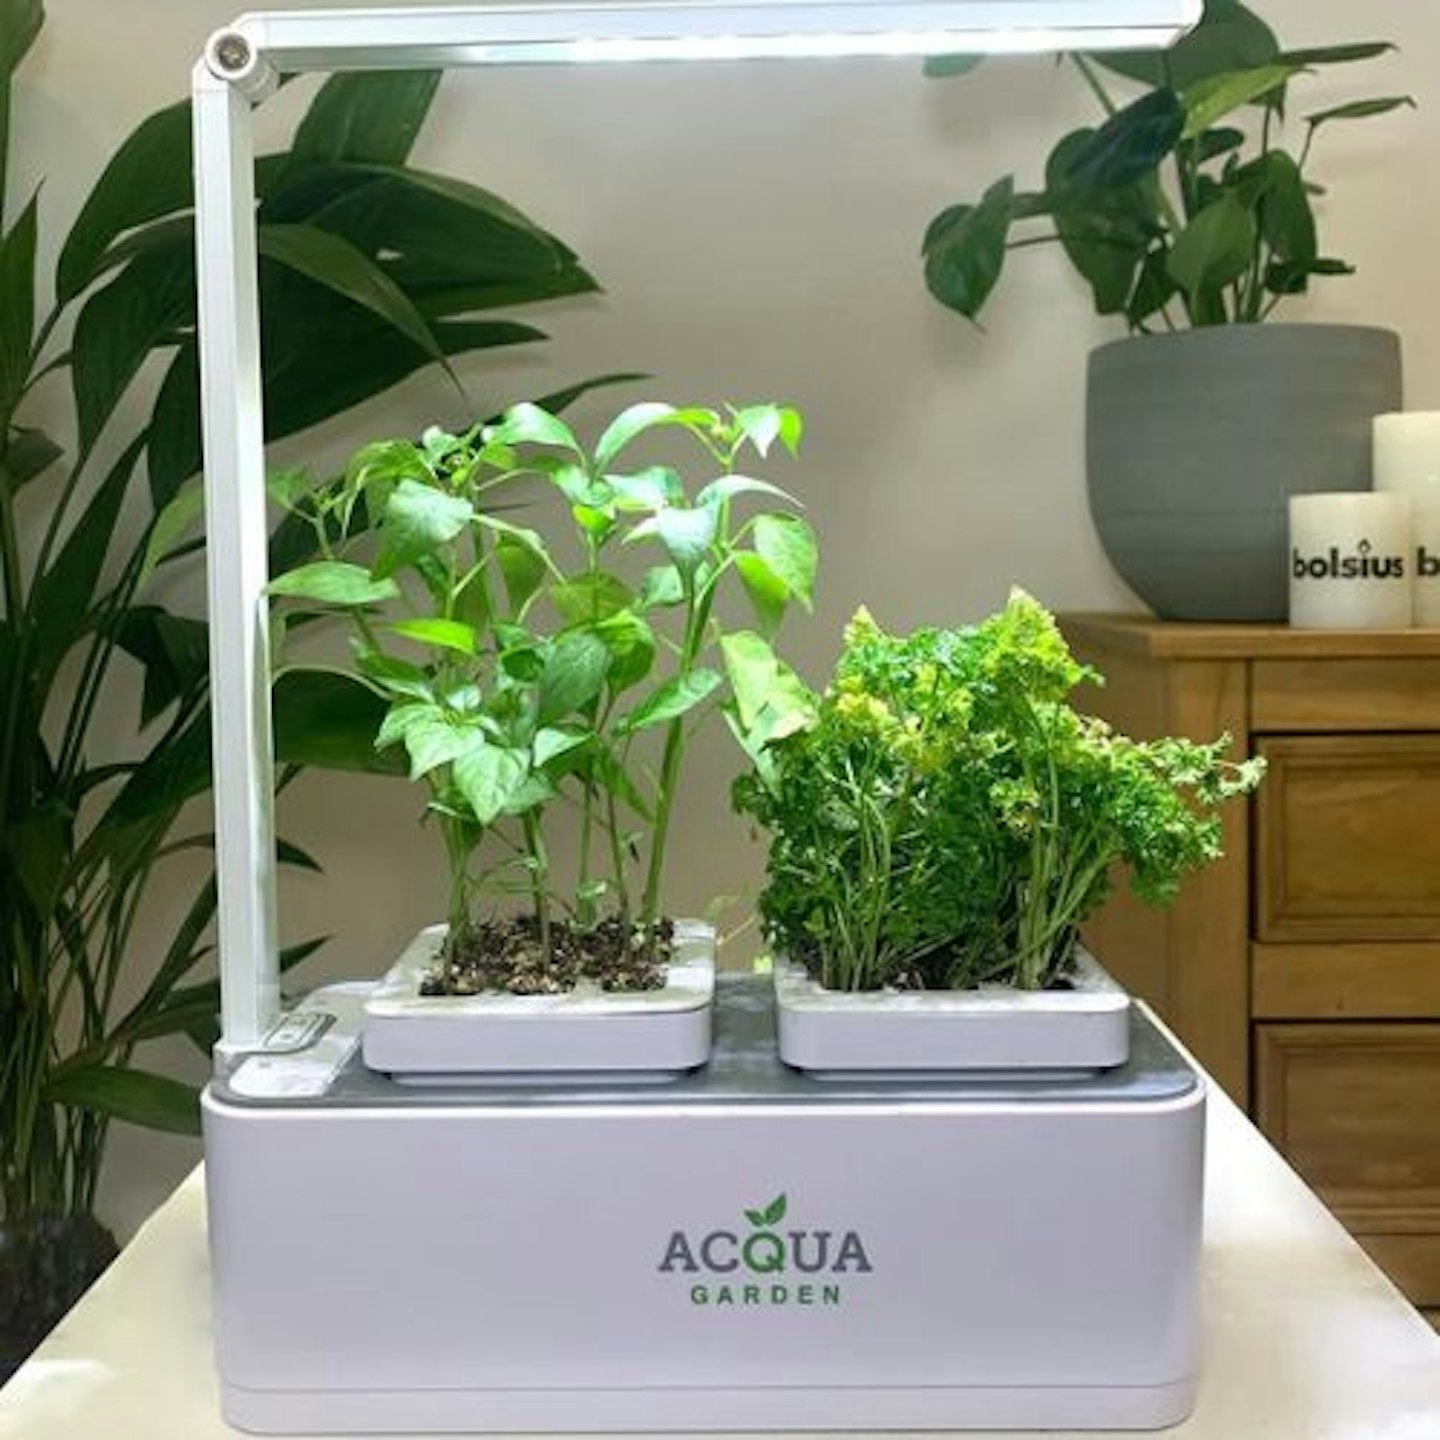 Acqua Smart Garden One Hydroponic Growing System